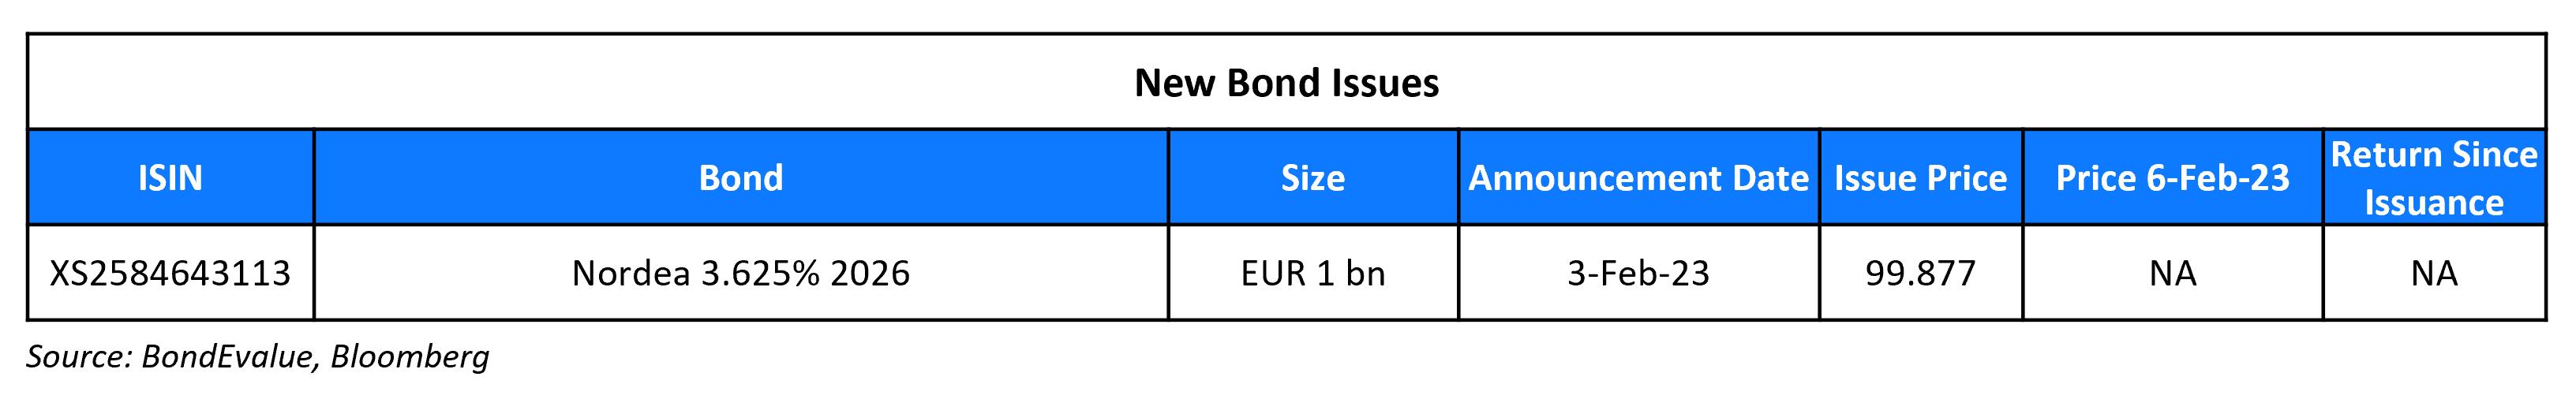 New Bond Issues 6 Feb 23